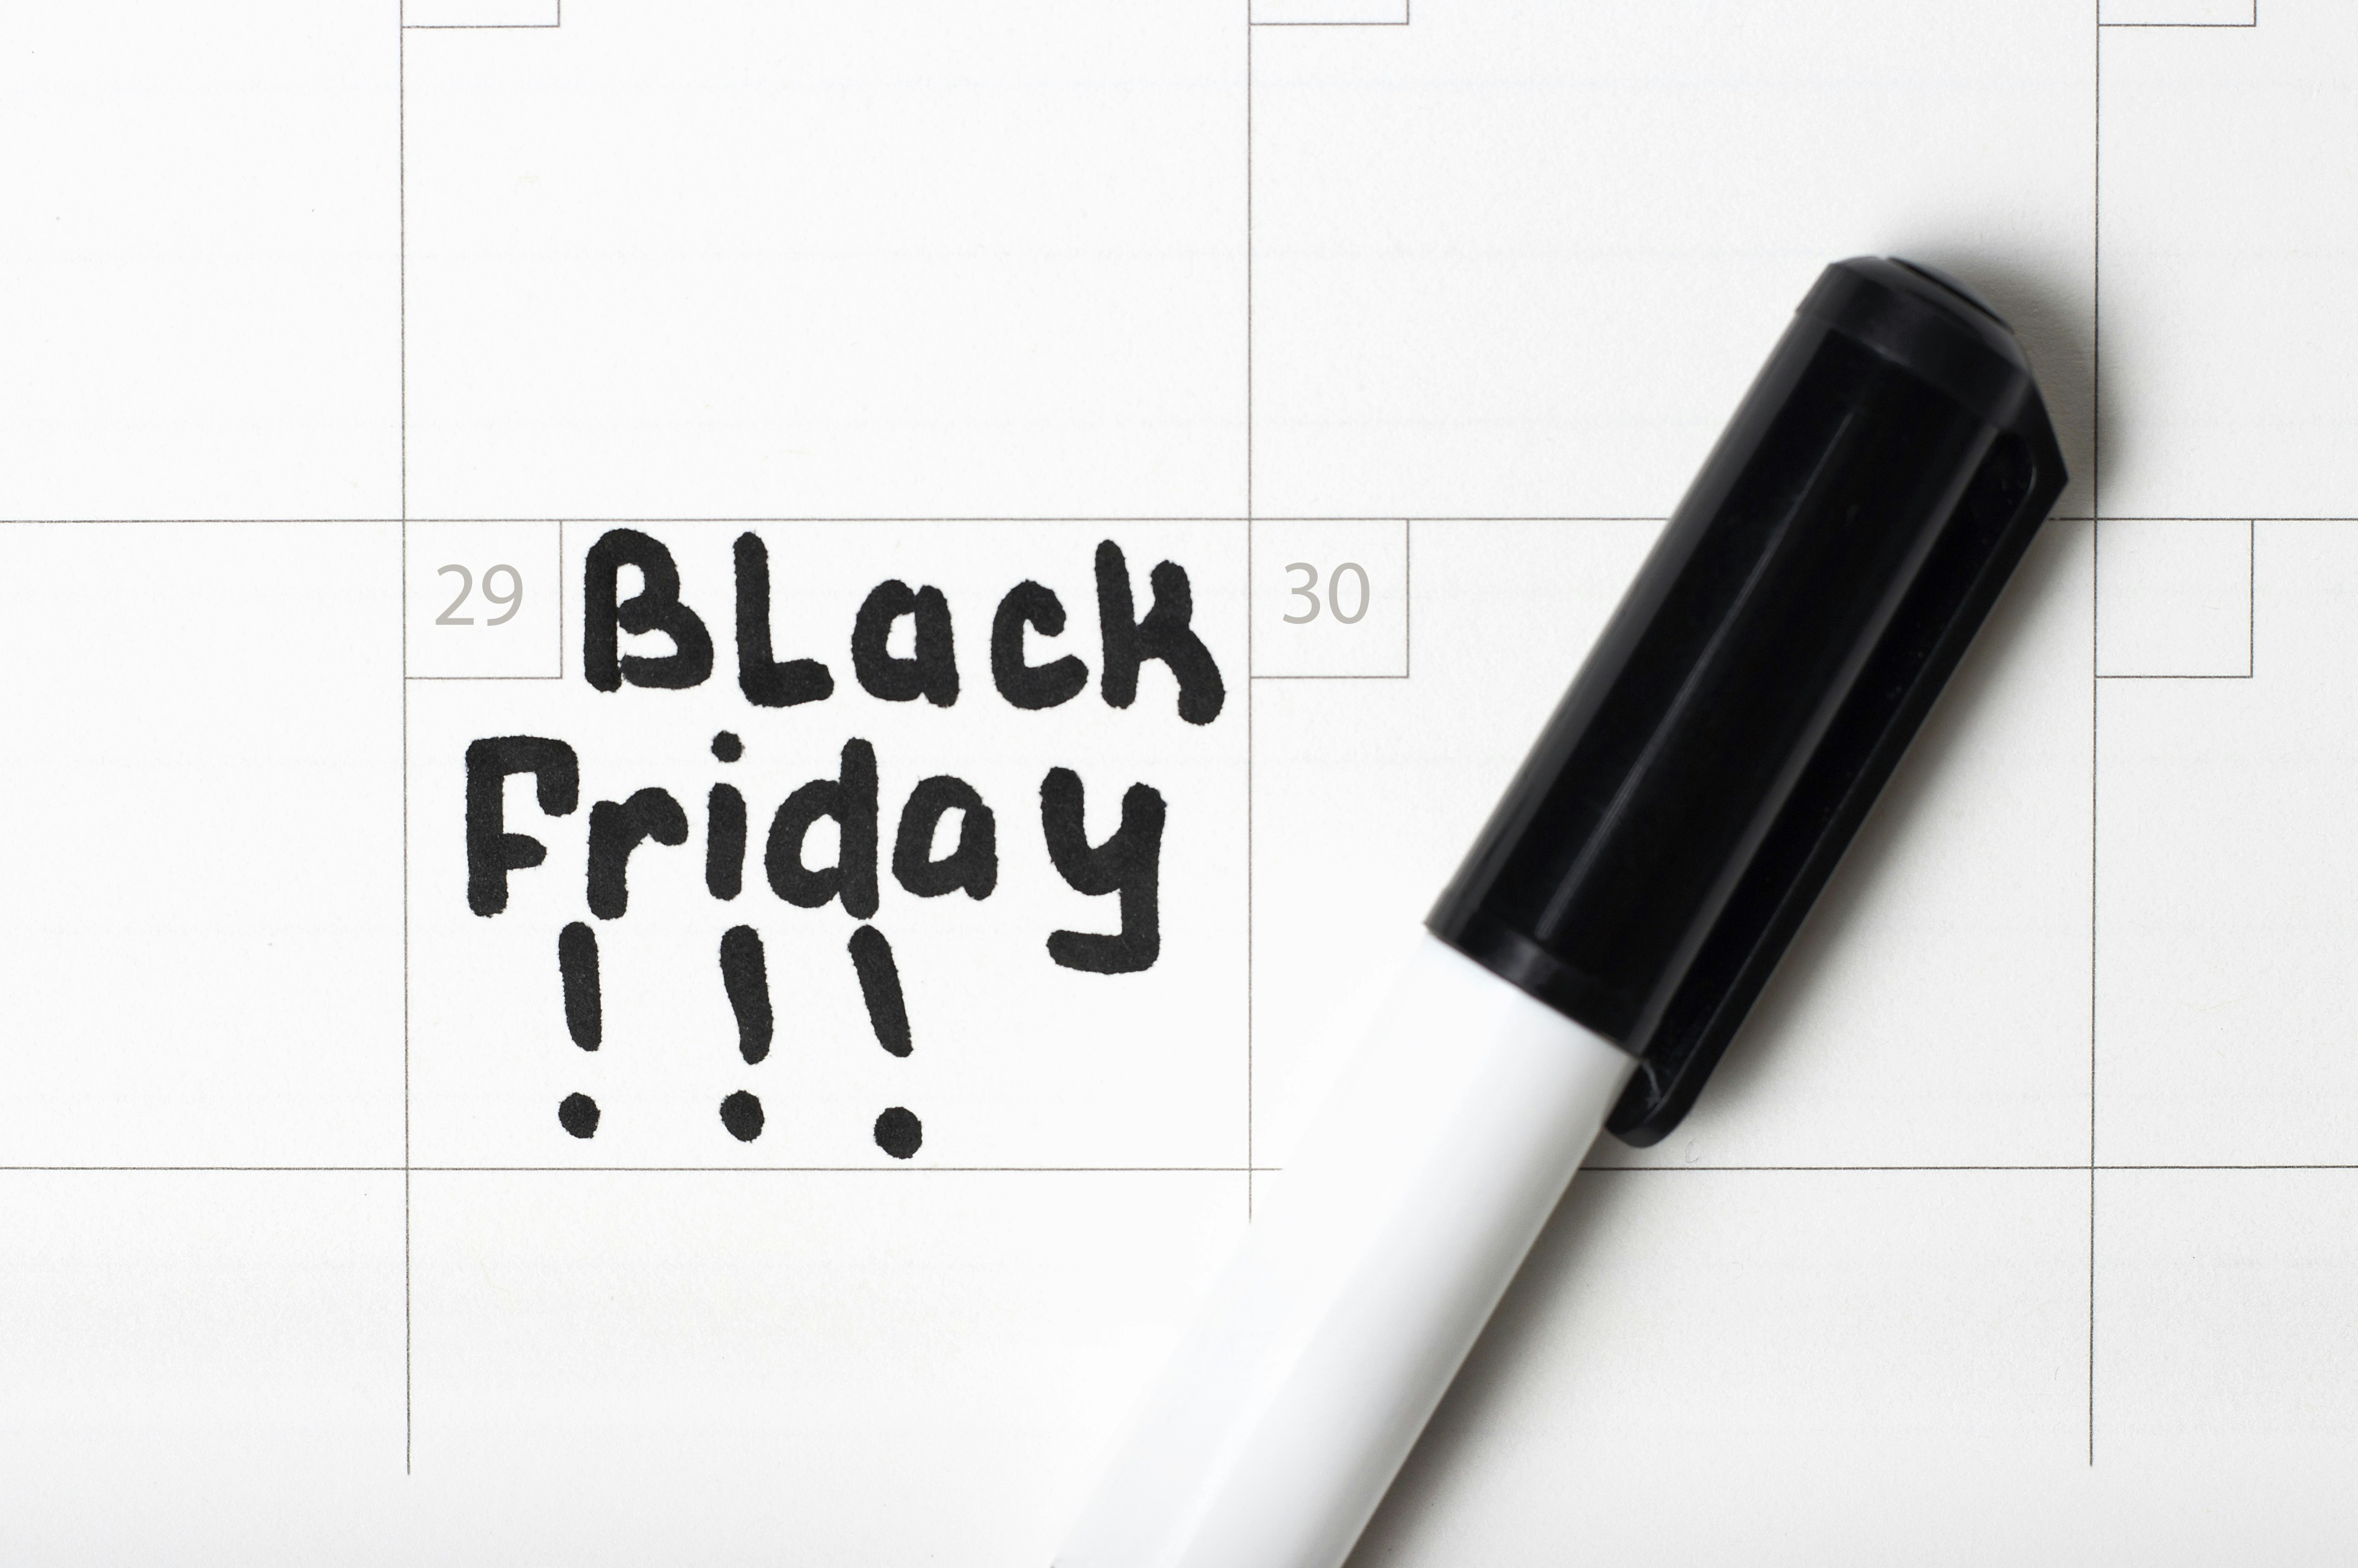 Black Friday written on a calendar on Nov 29